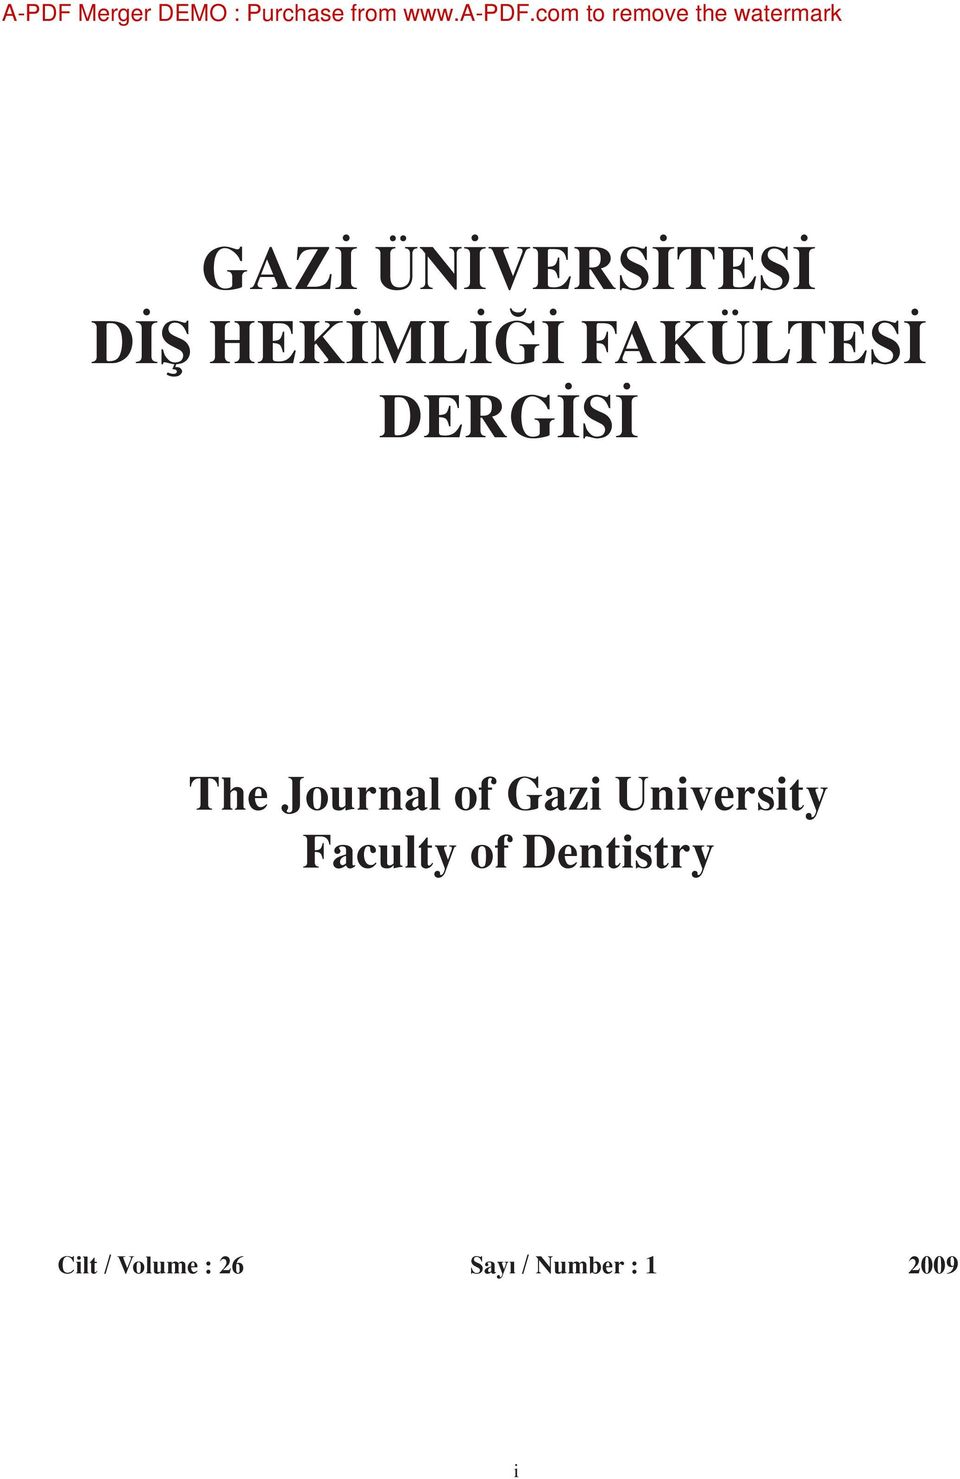 ML FAKÜLTES DERG S The Journal of Gazi University